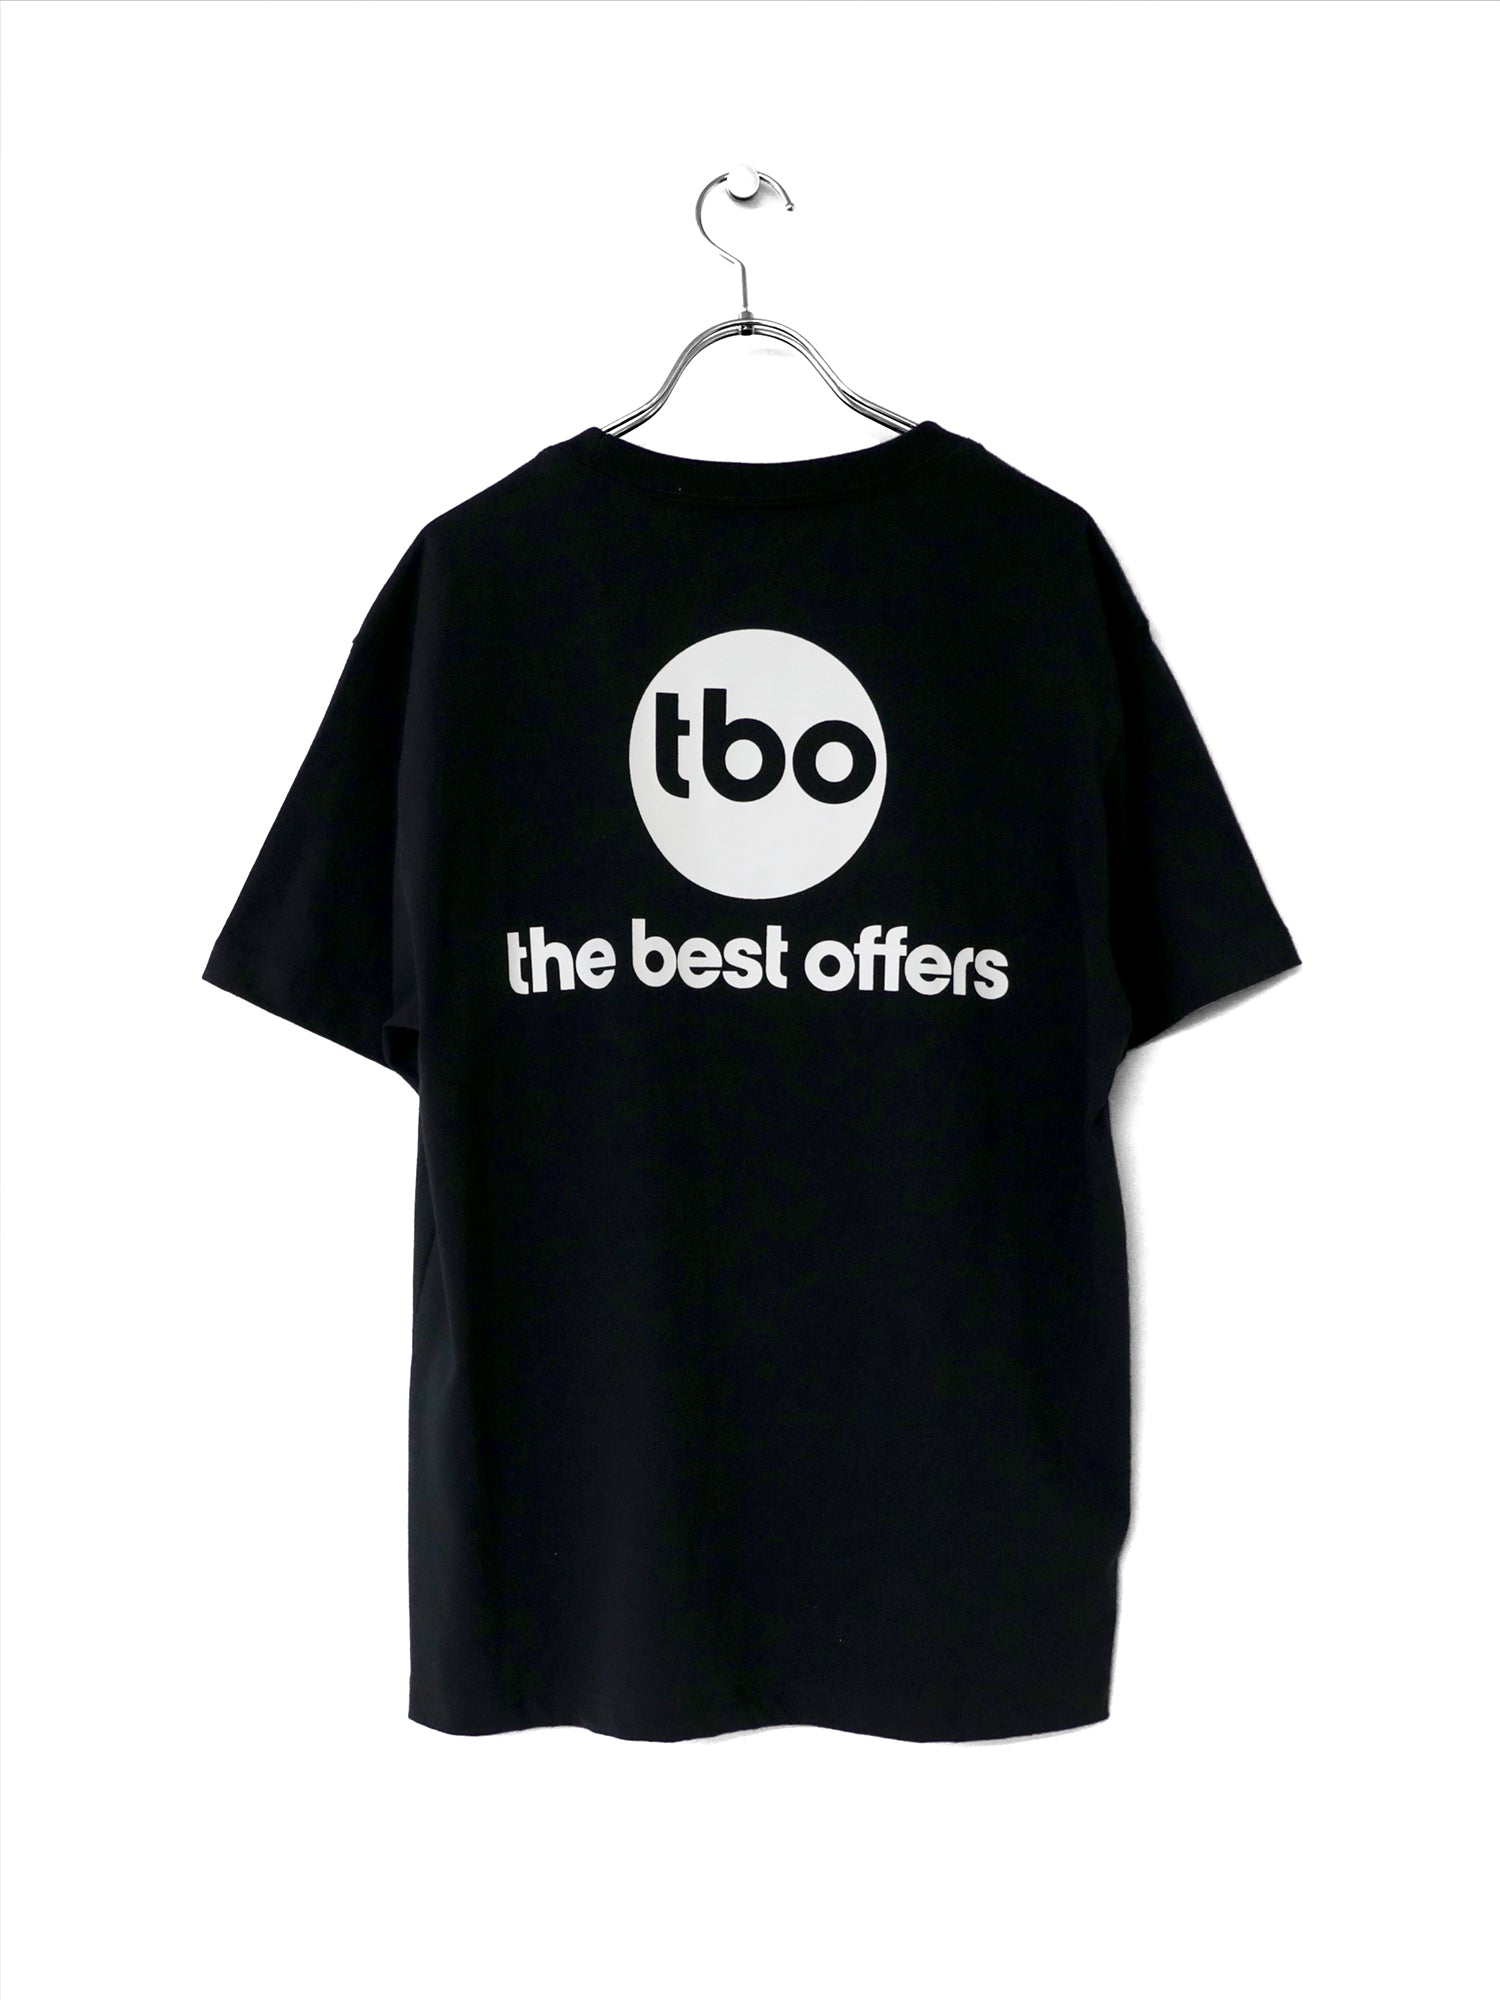 最佳优惠“tbo LOGO”8.1oz TEE